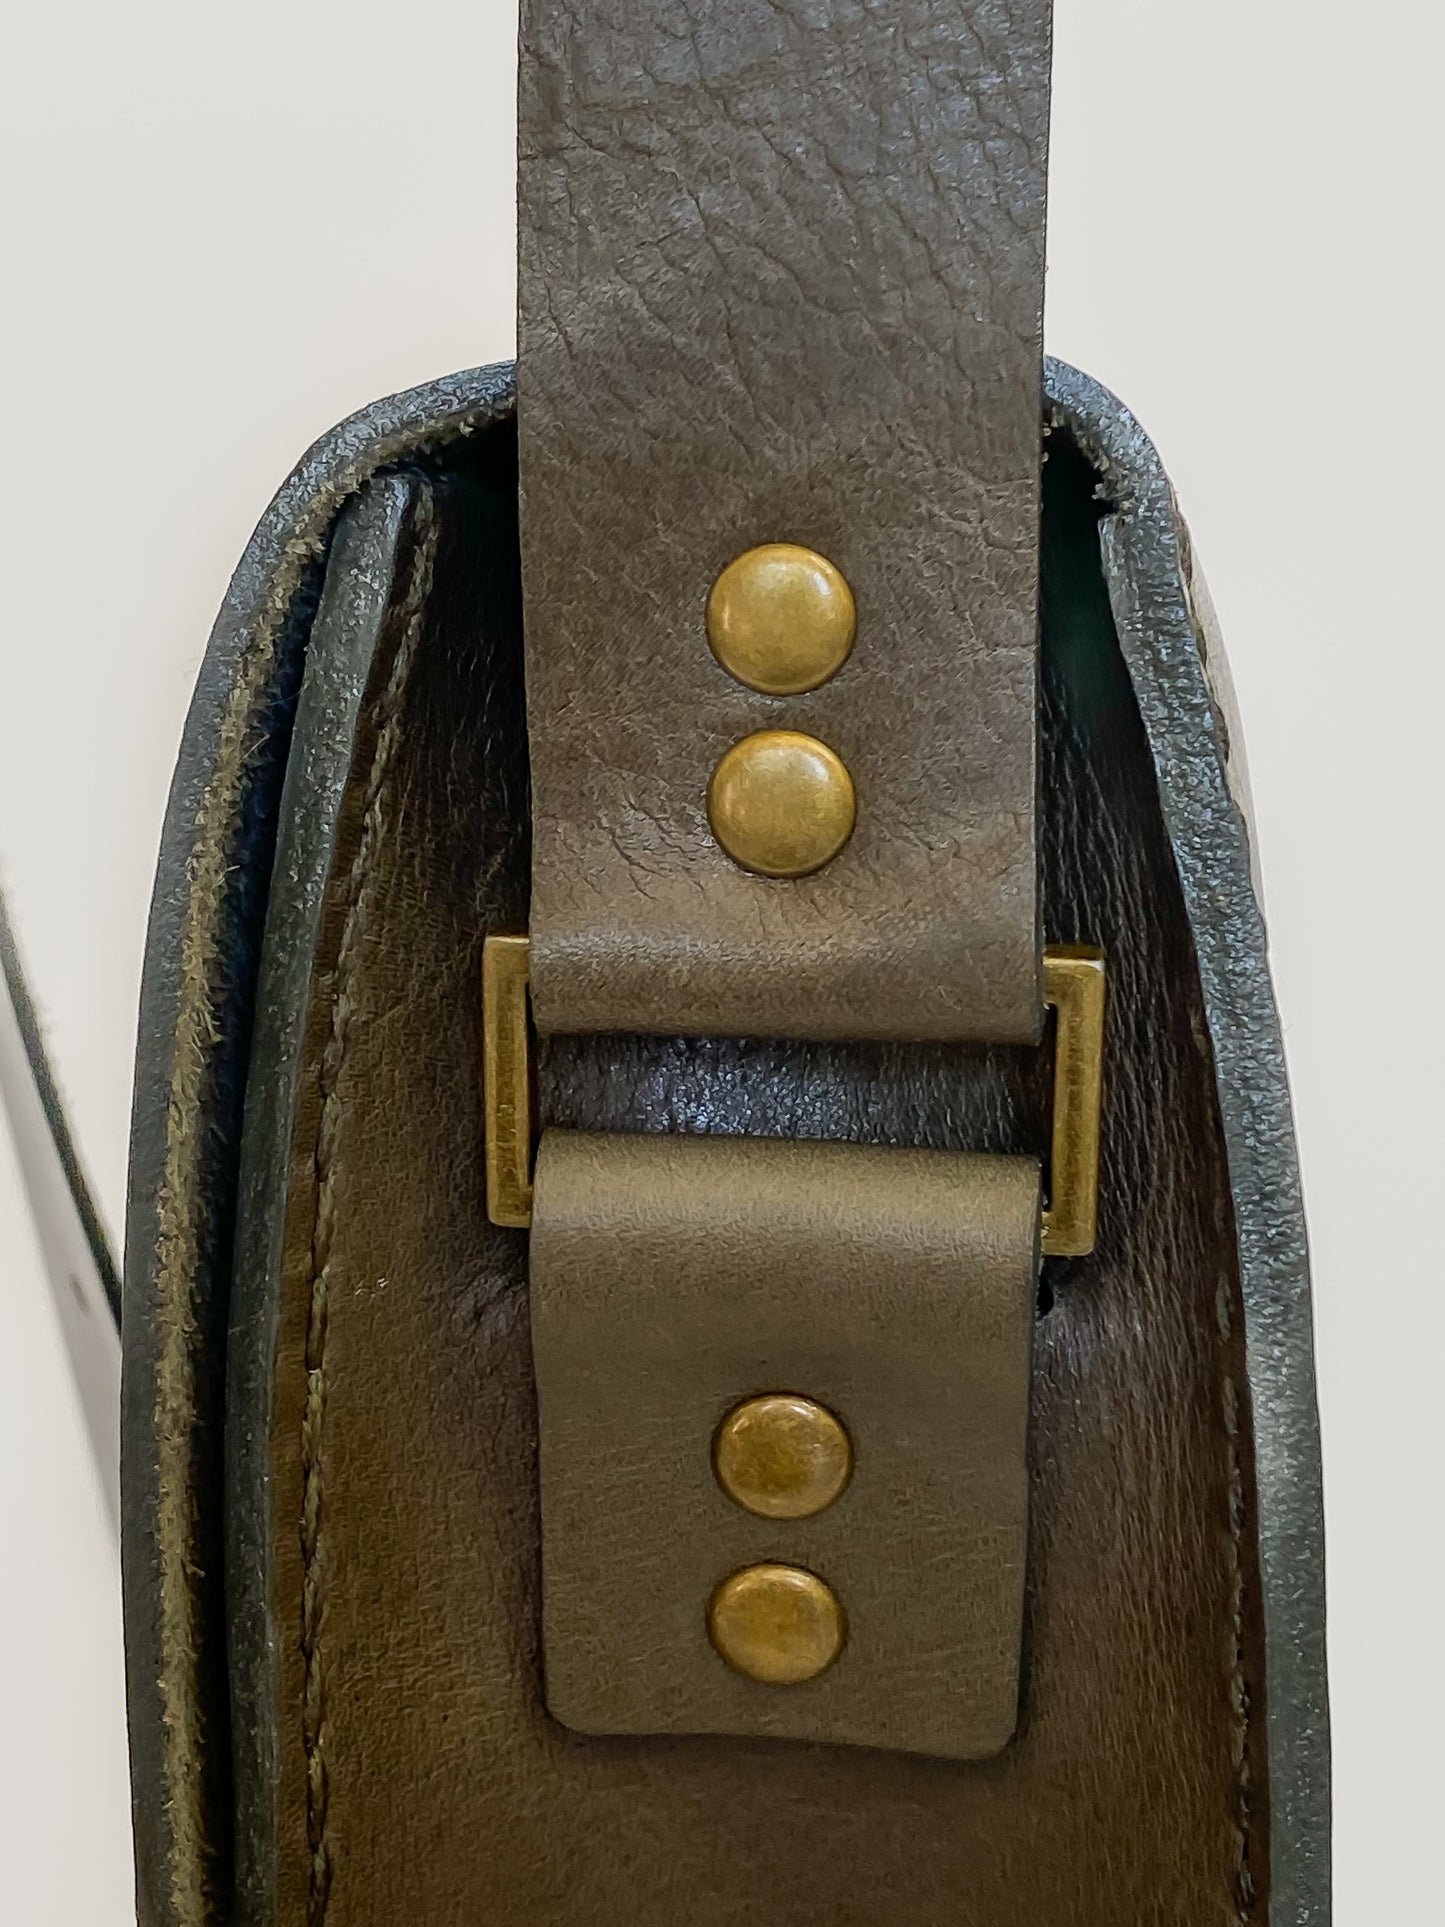 Sanna Leather A4 Contemporary Messenger Bag